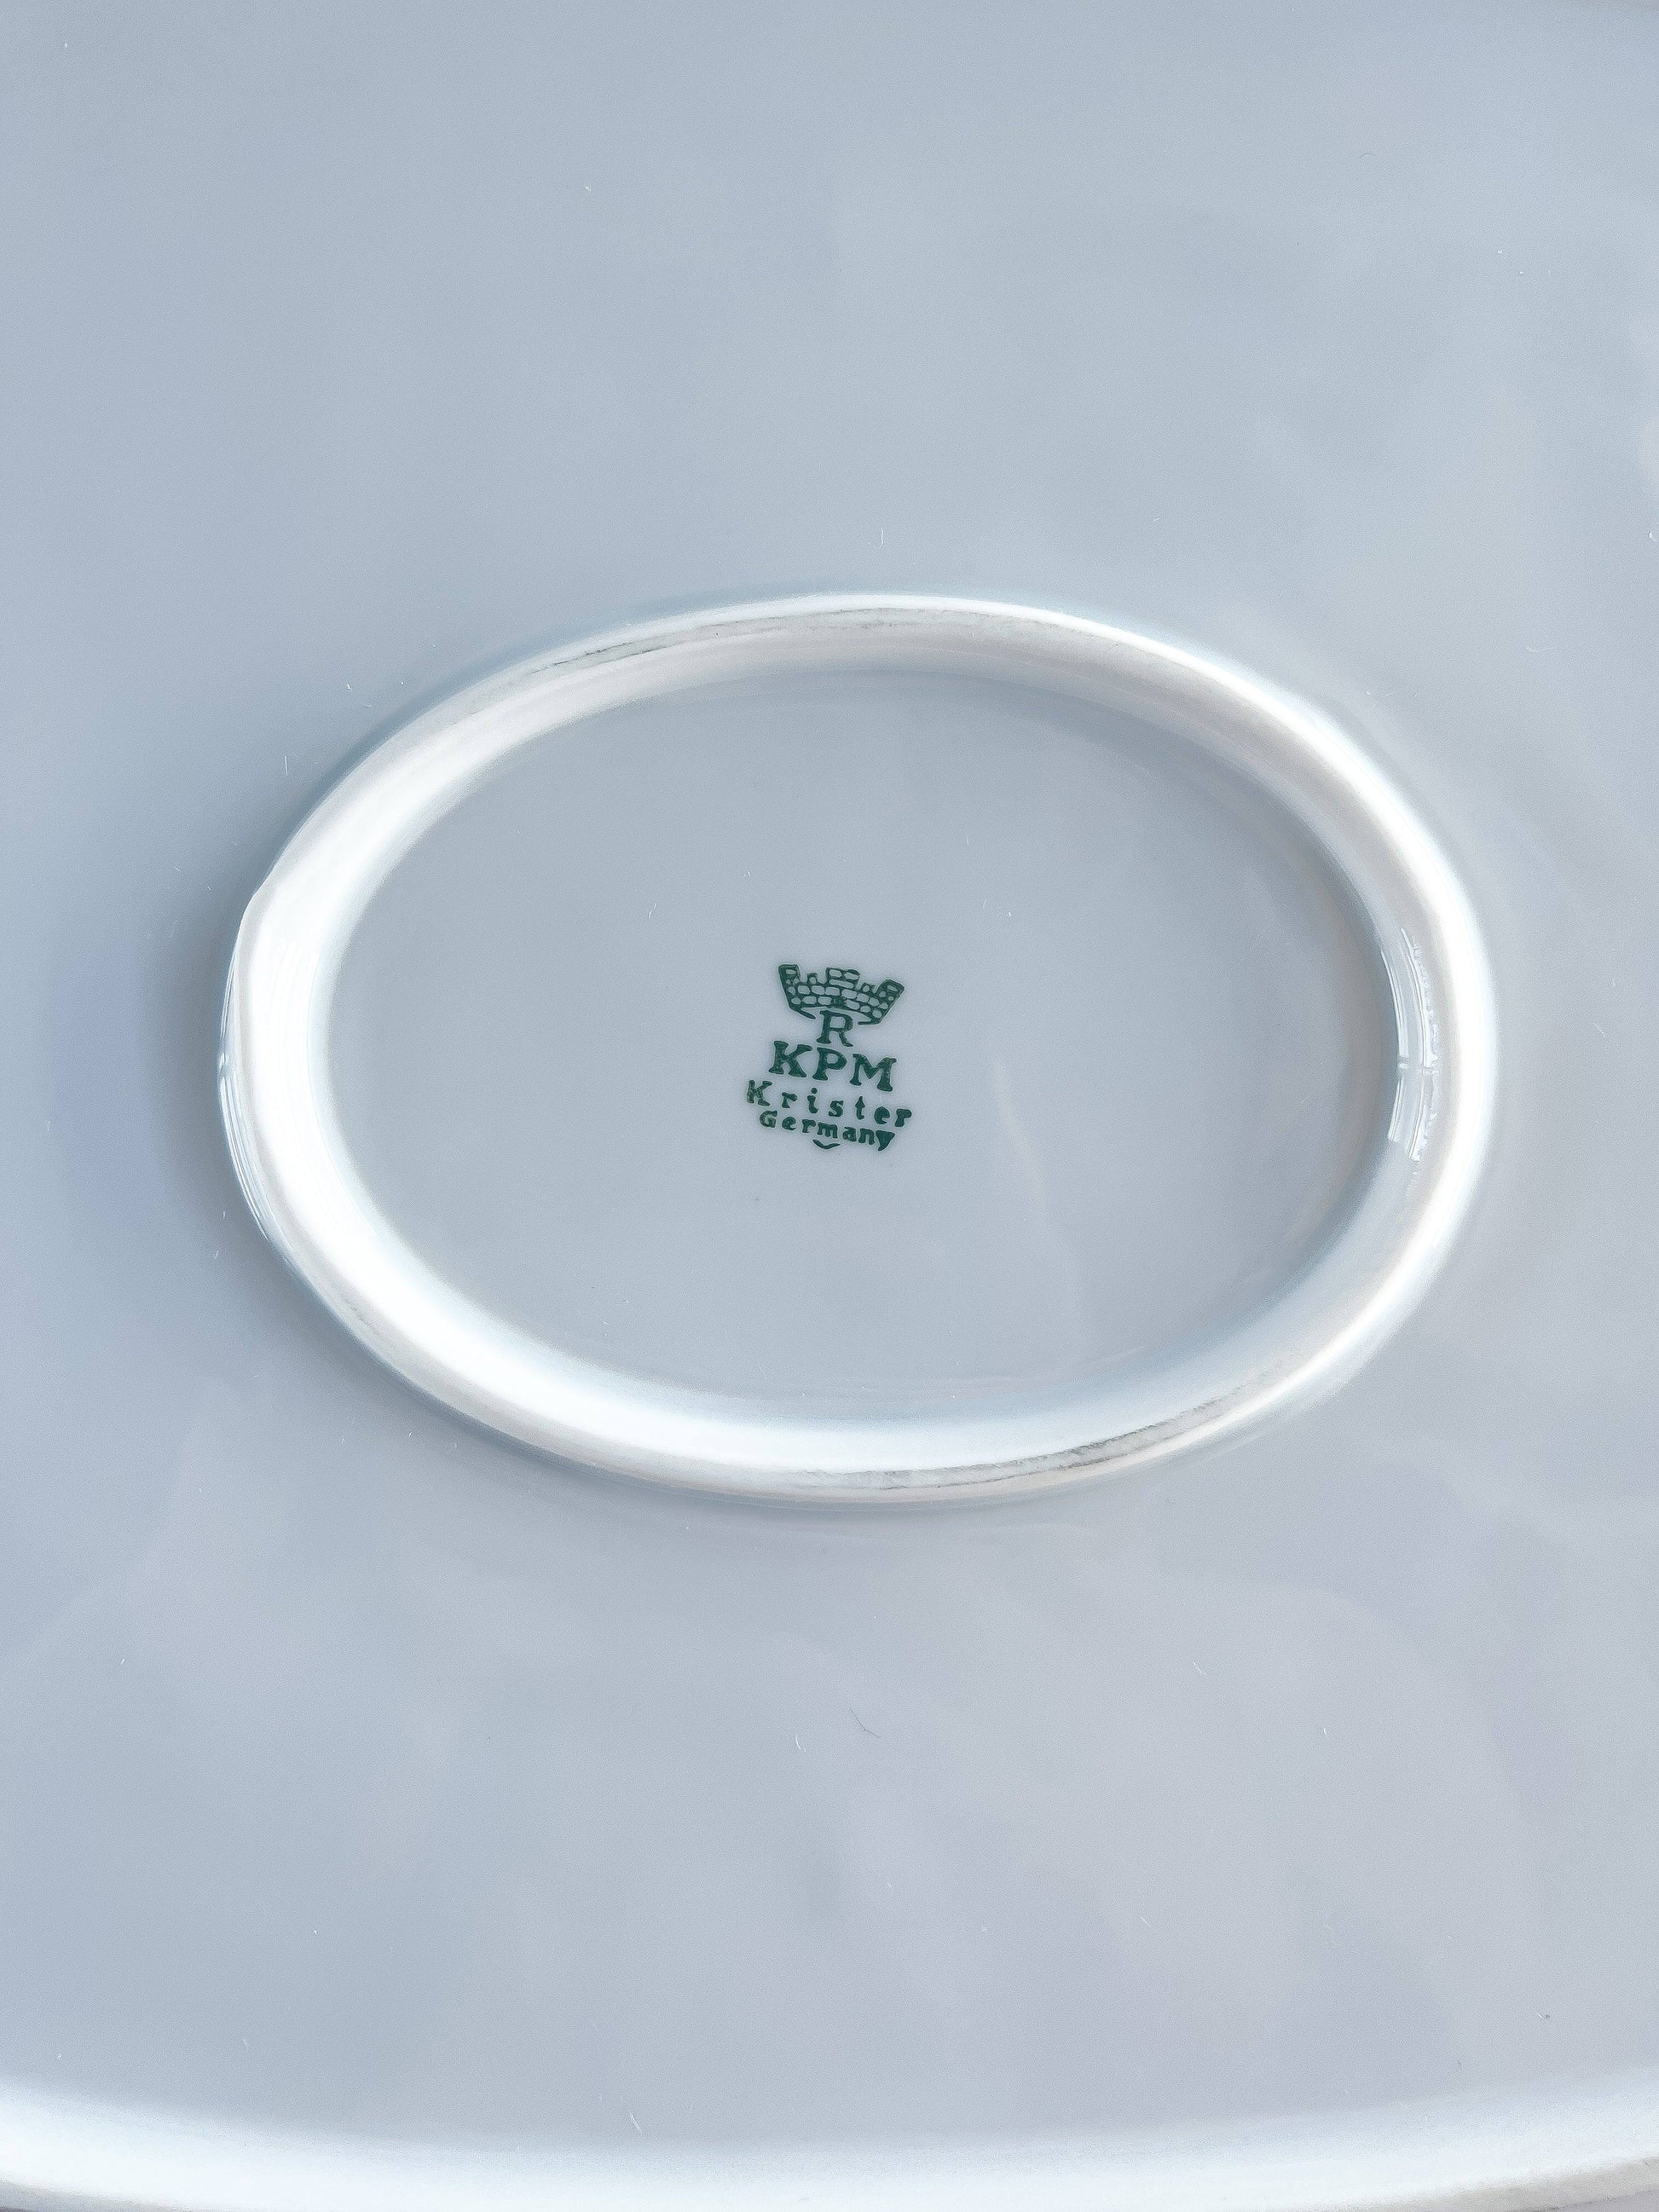 KPM Germany 33cm Oval Serving Platter - 'Krister' Collection - SOSC Home